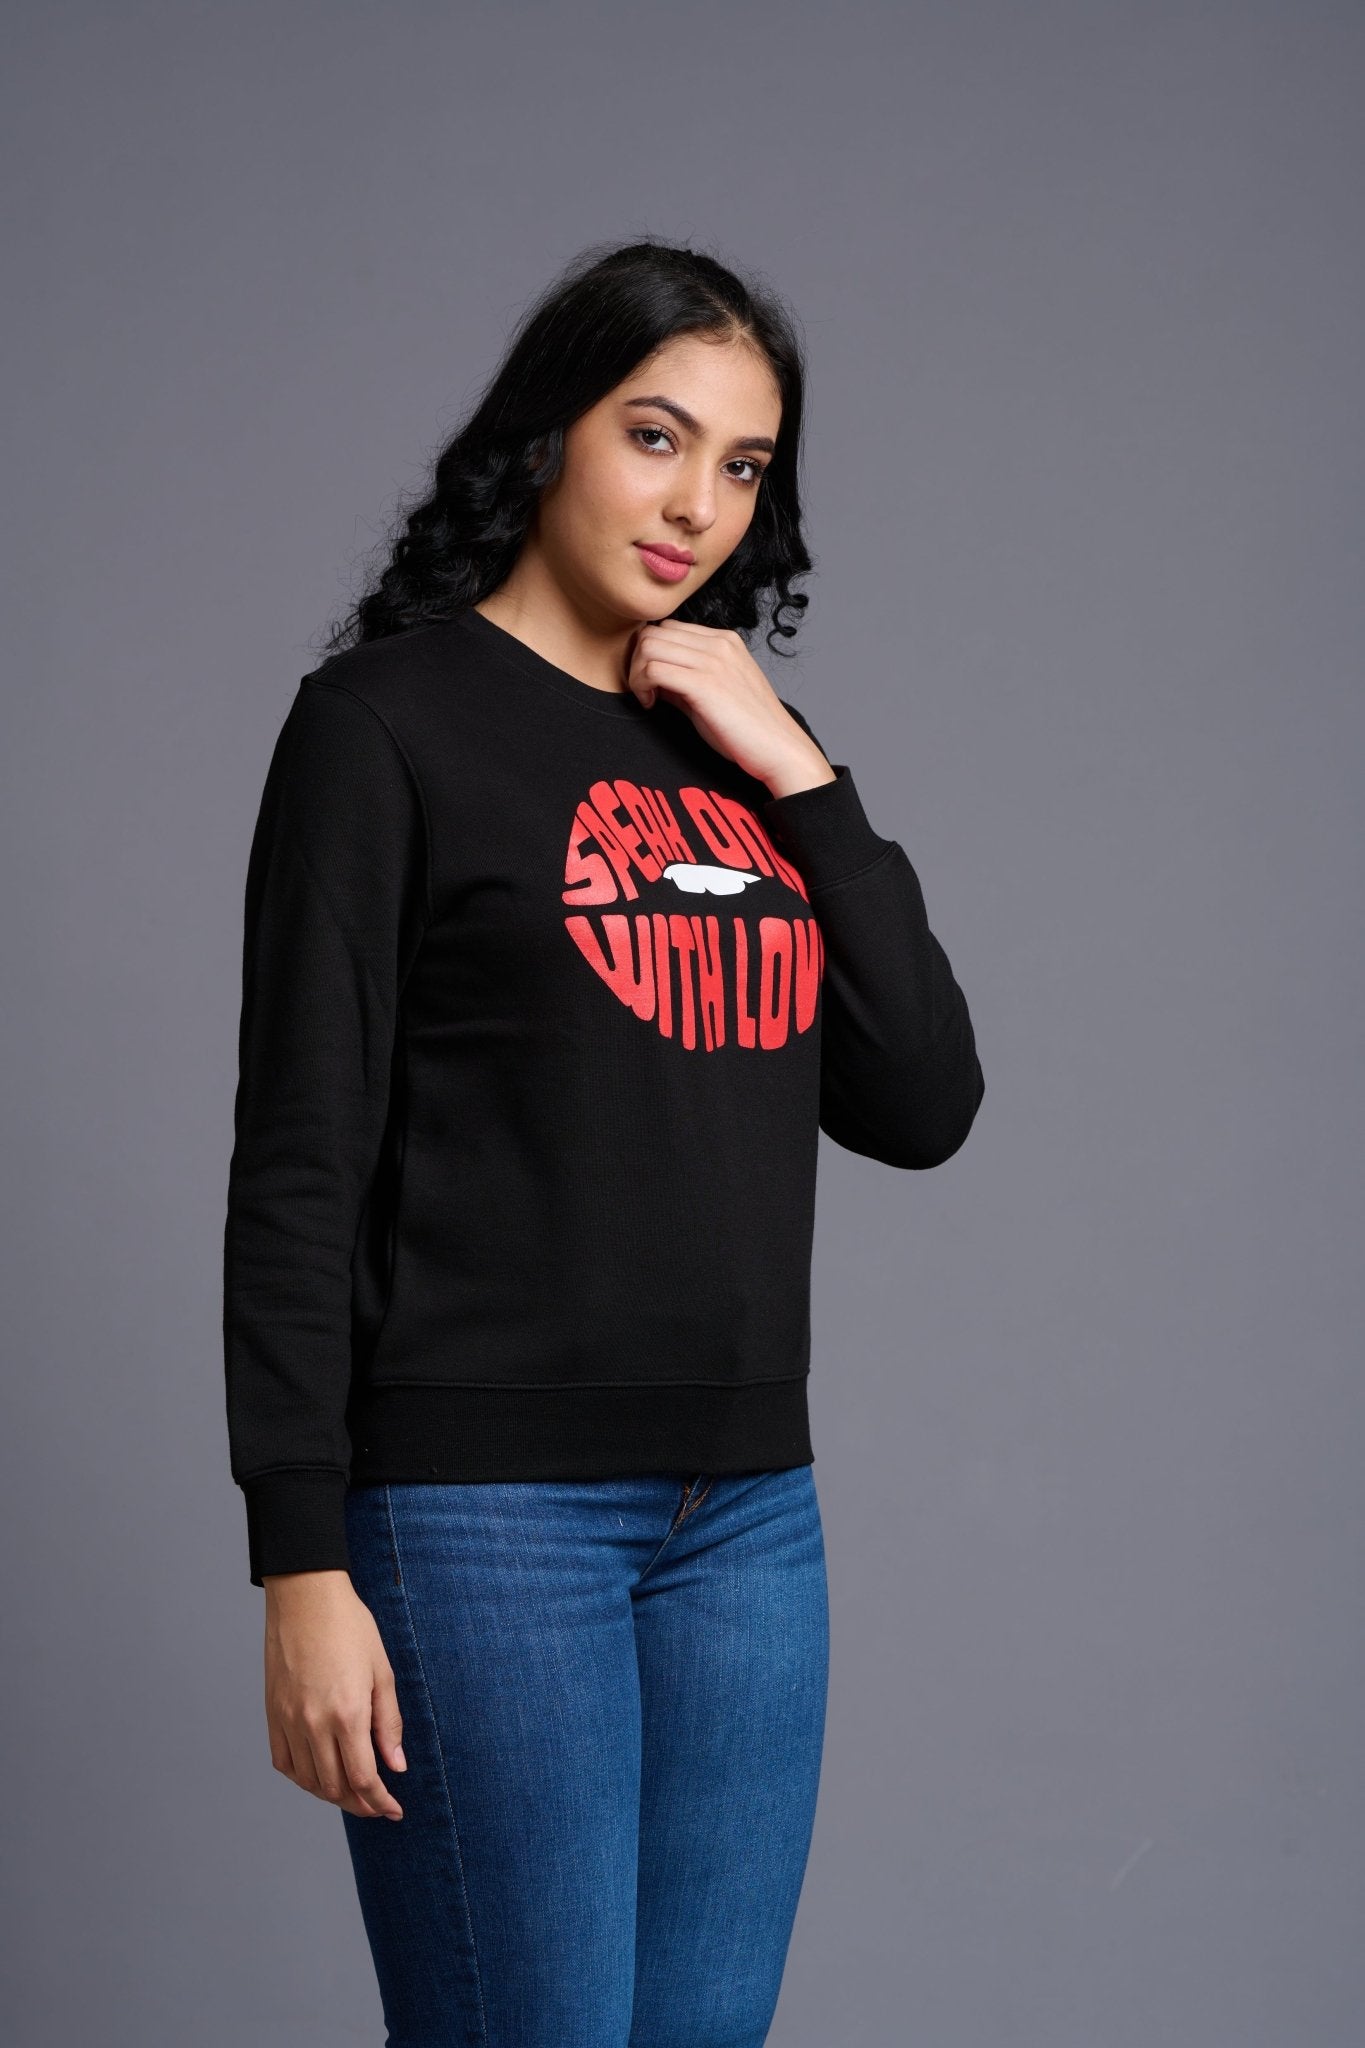 Speak Only With Love Printed Black Sweatshirt for Women - Go Devil